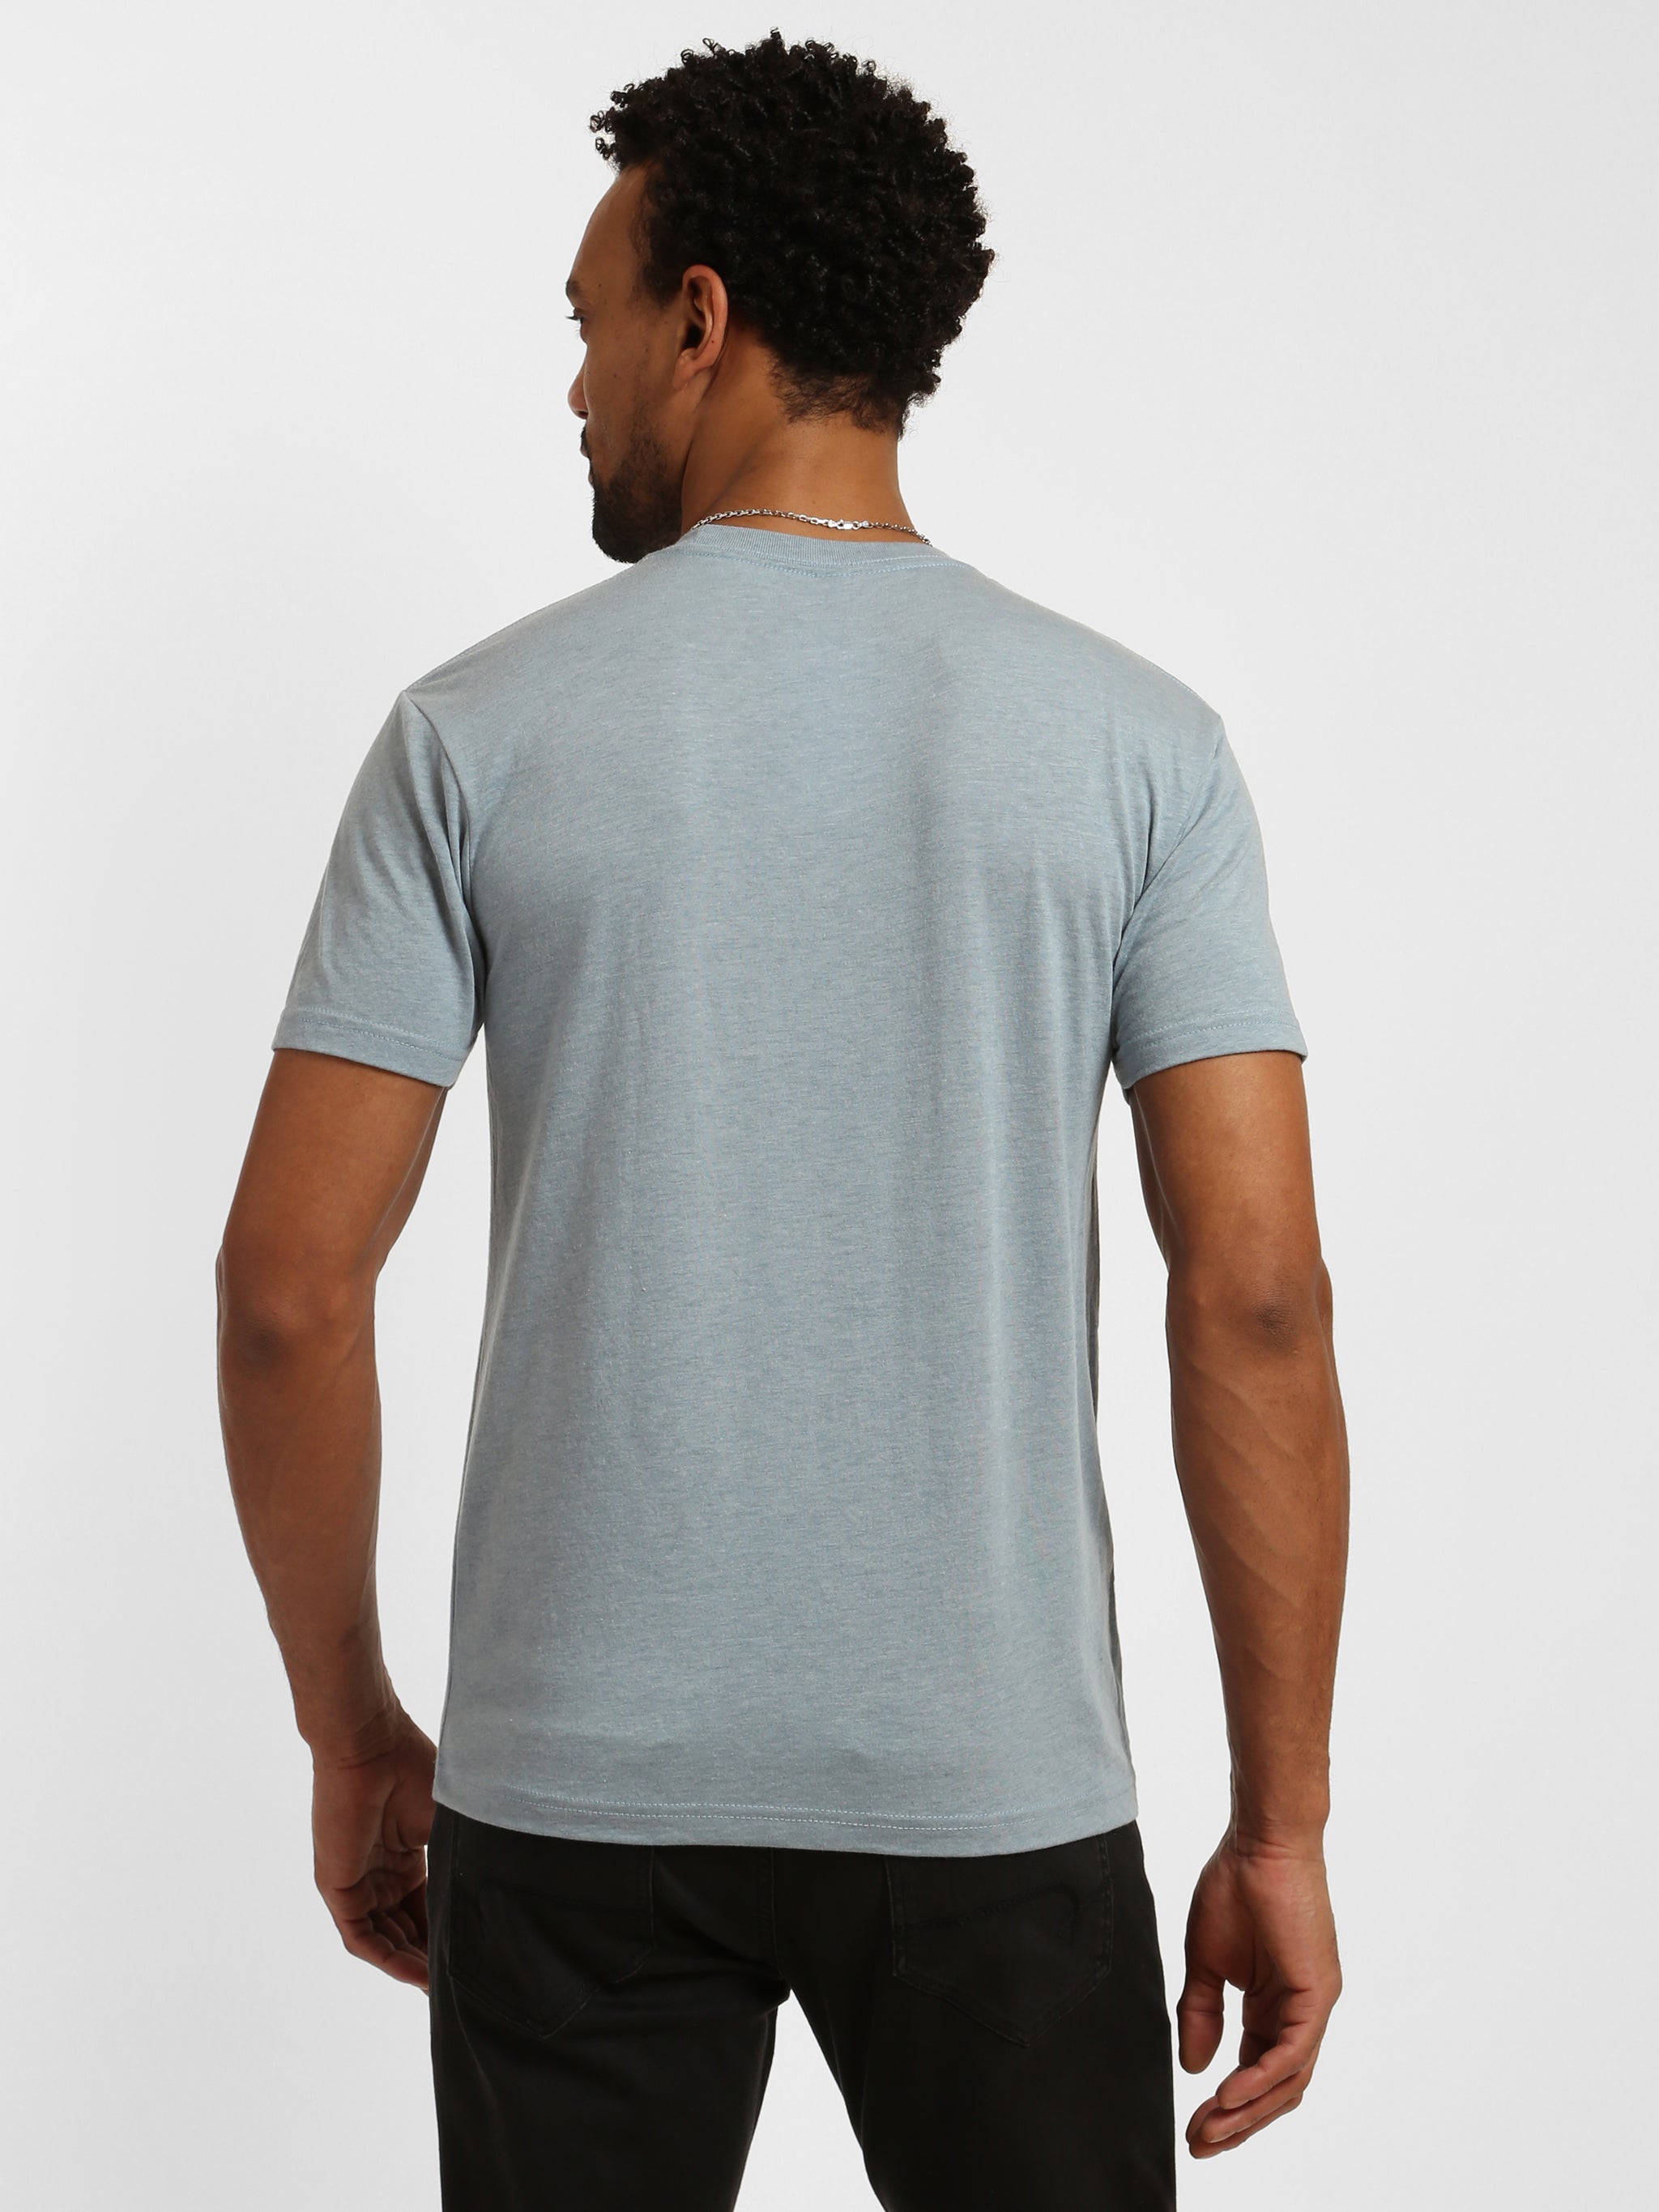 Men's Round No Sleep Graphic T-Shirt | Brooklyn Industries